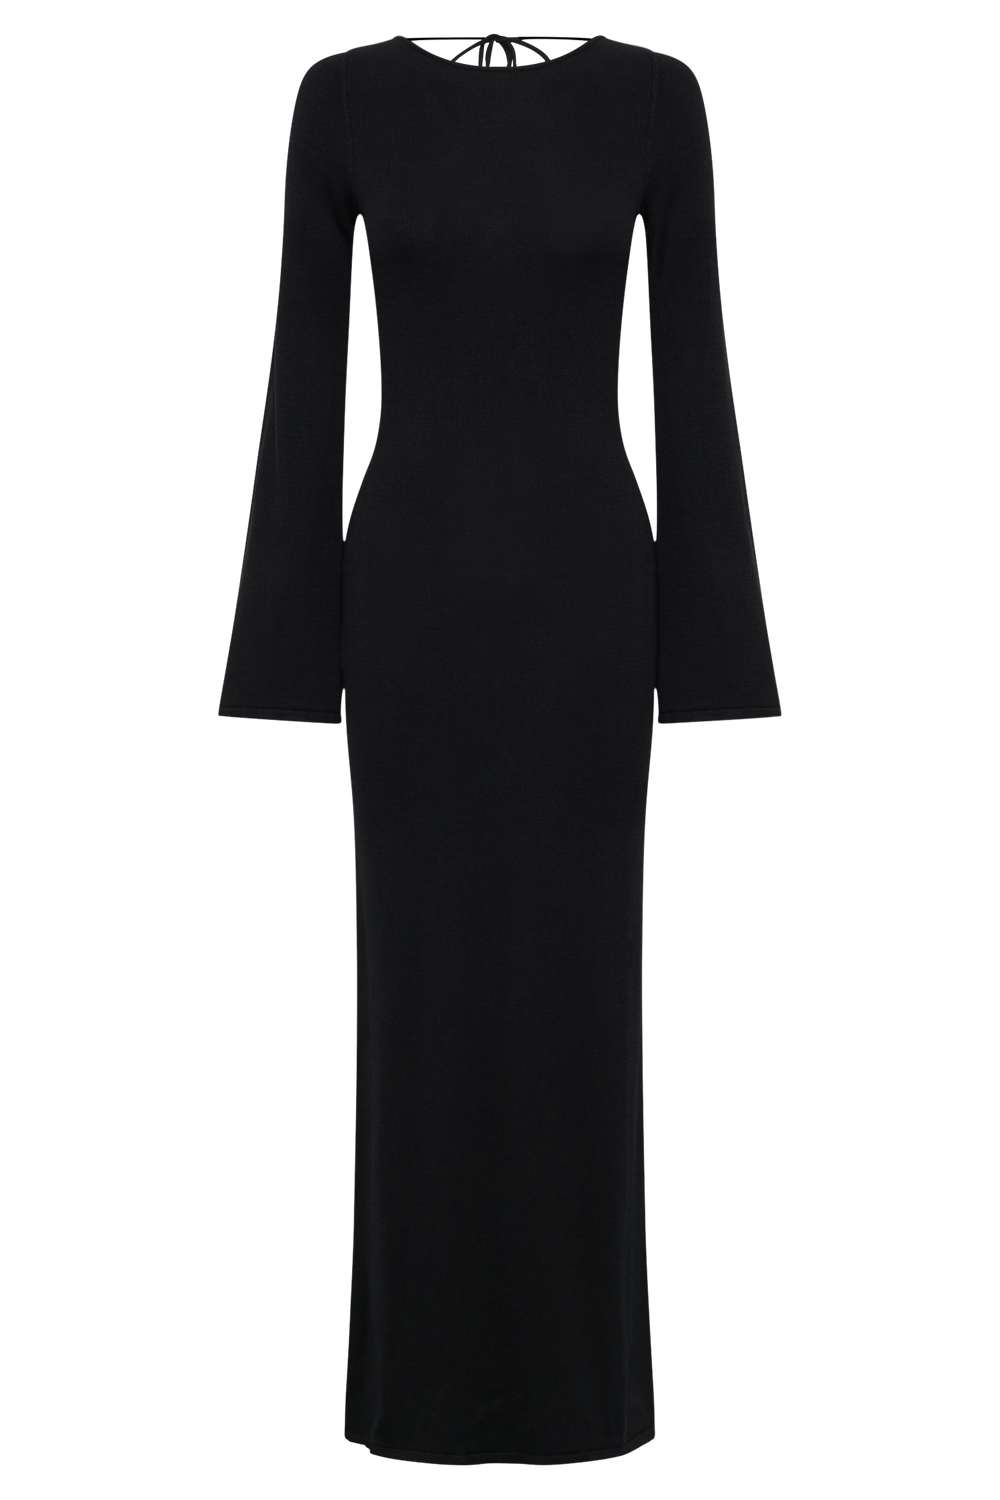 Marleigh Flare Sleeve Knit Maxi Dress - Black